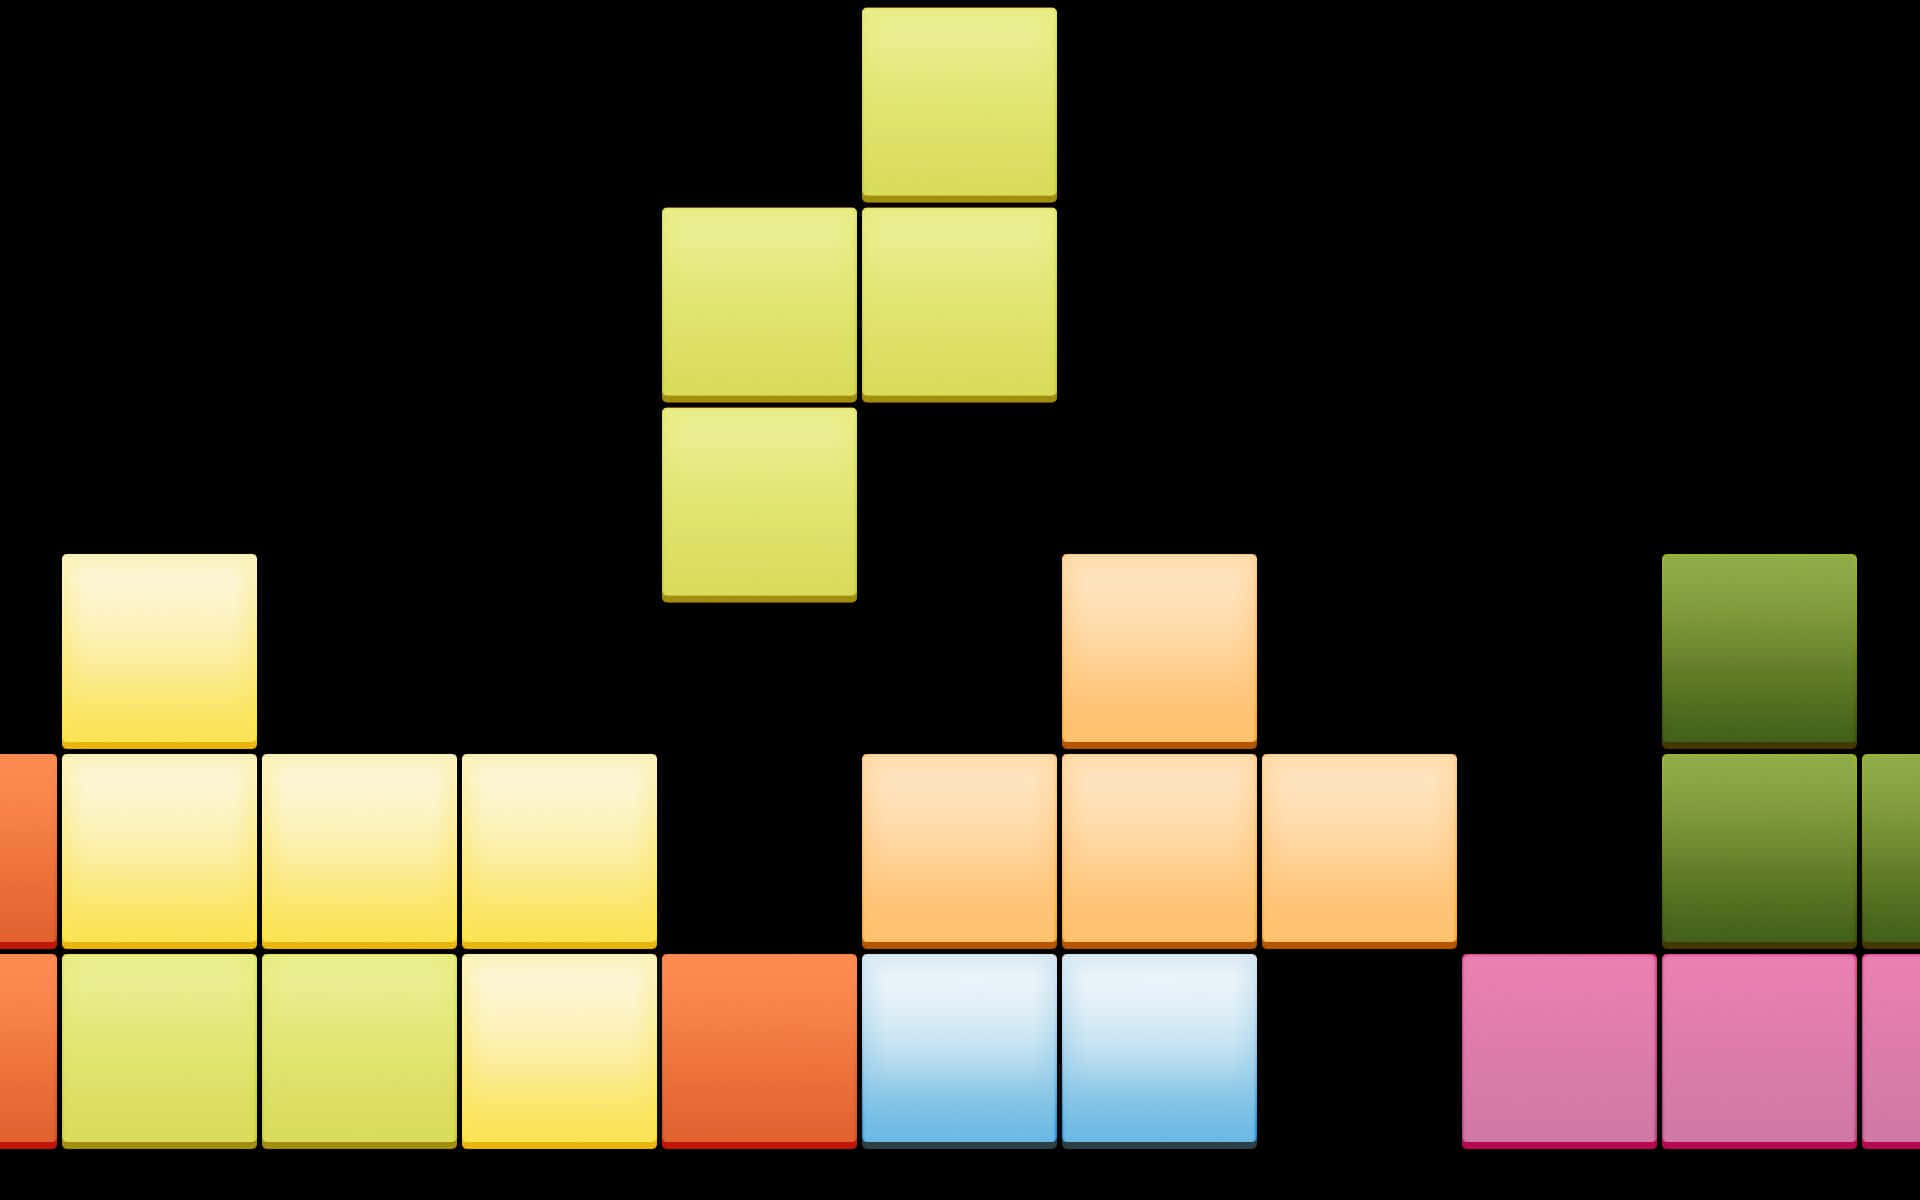 Colorful Tetris Blocks Arranging on a Dark Background